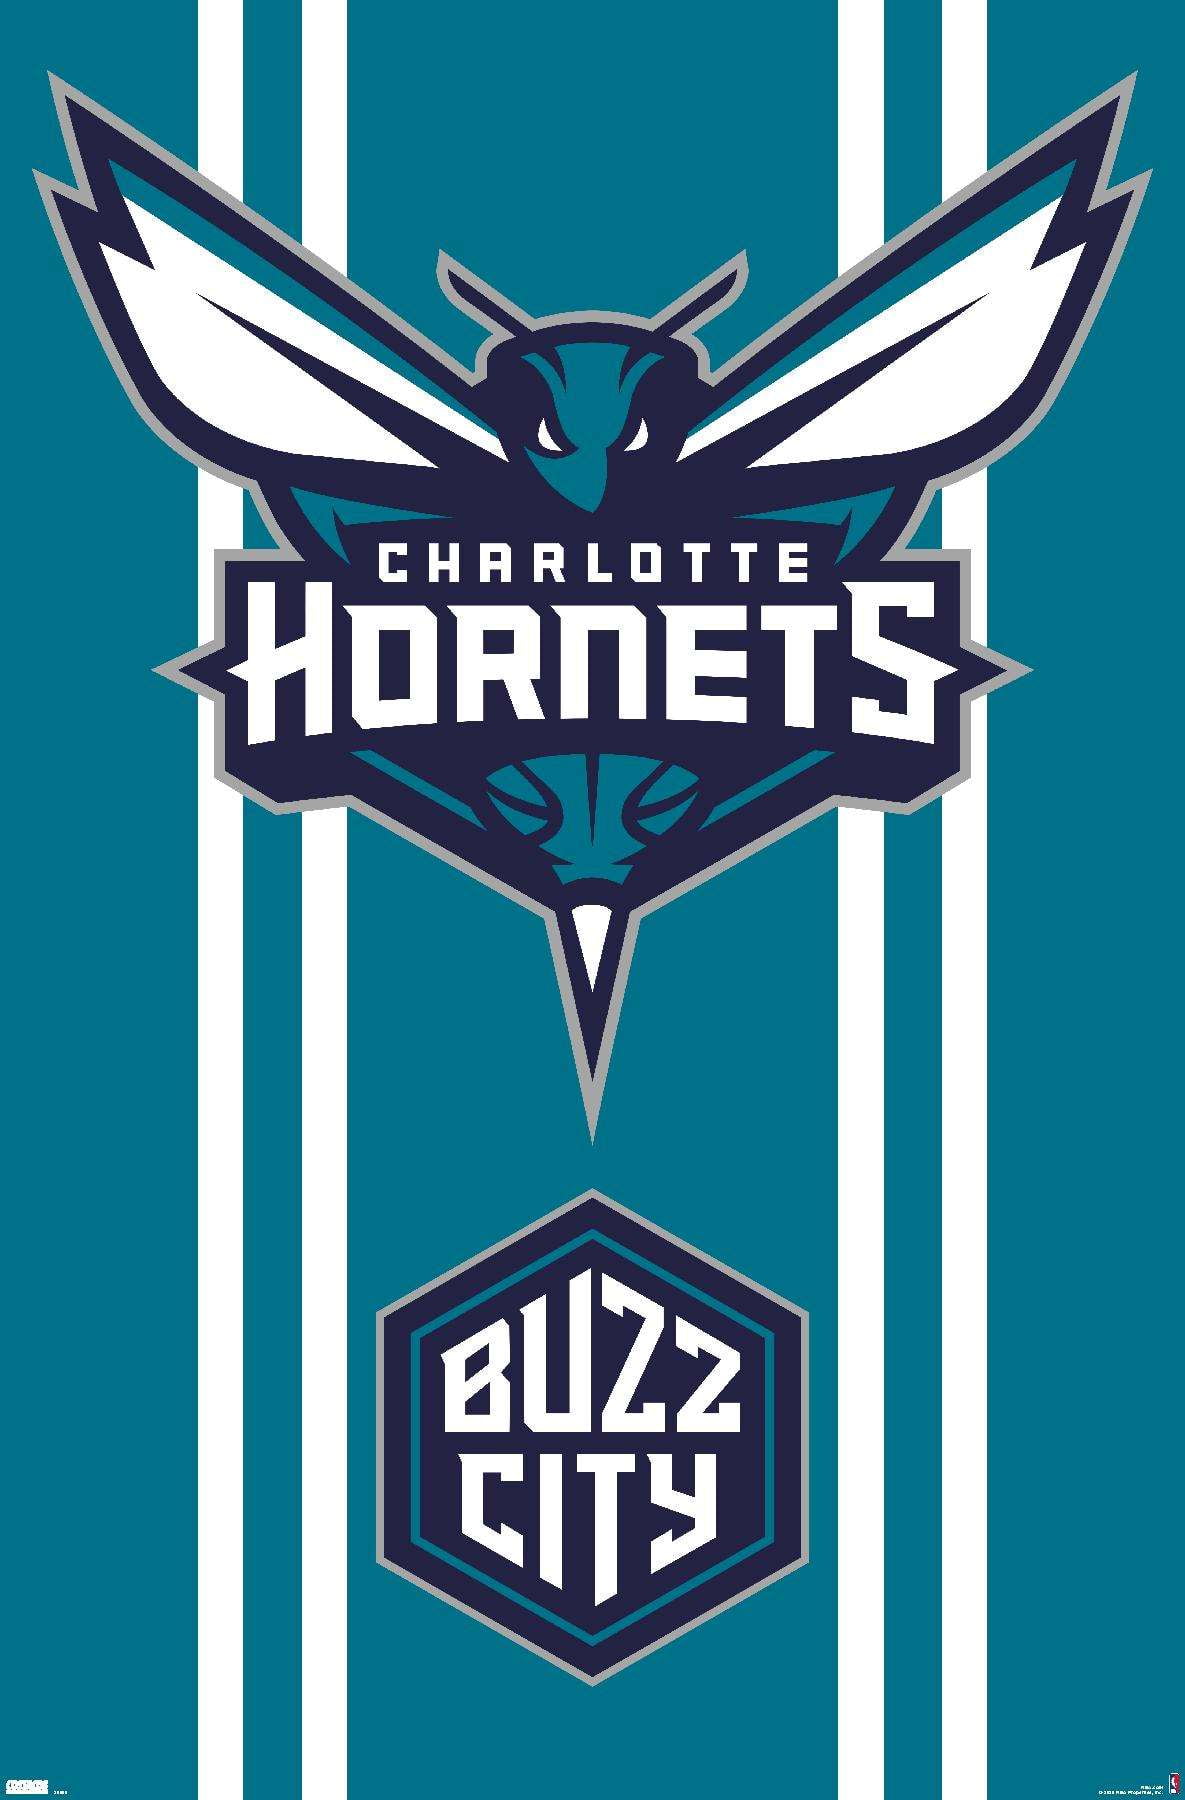 NBA Charlotte Hornets 'Buzz City